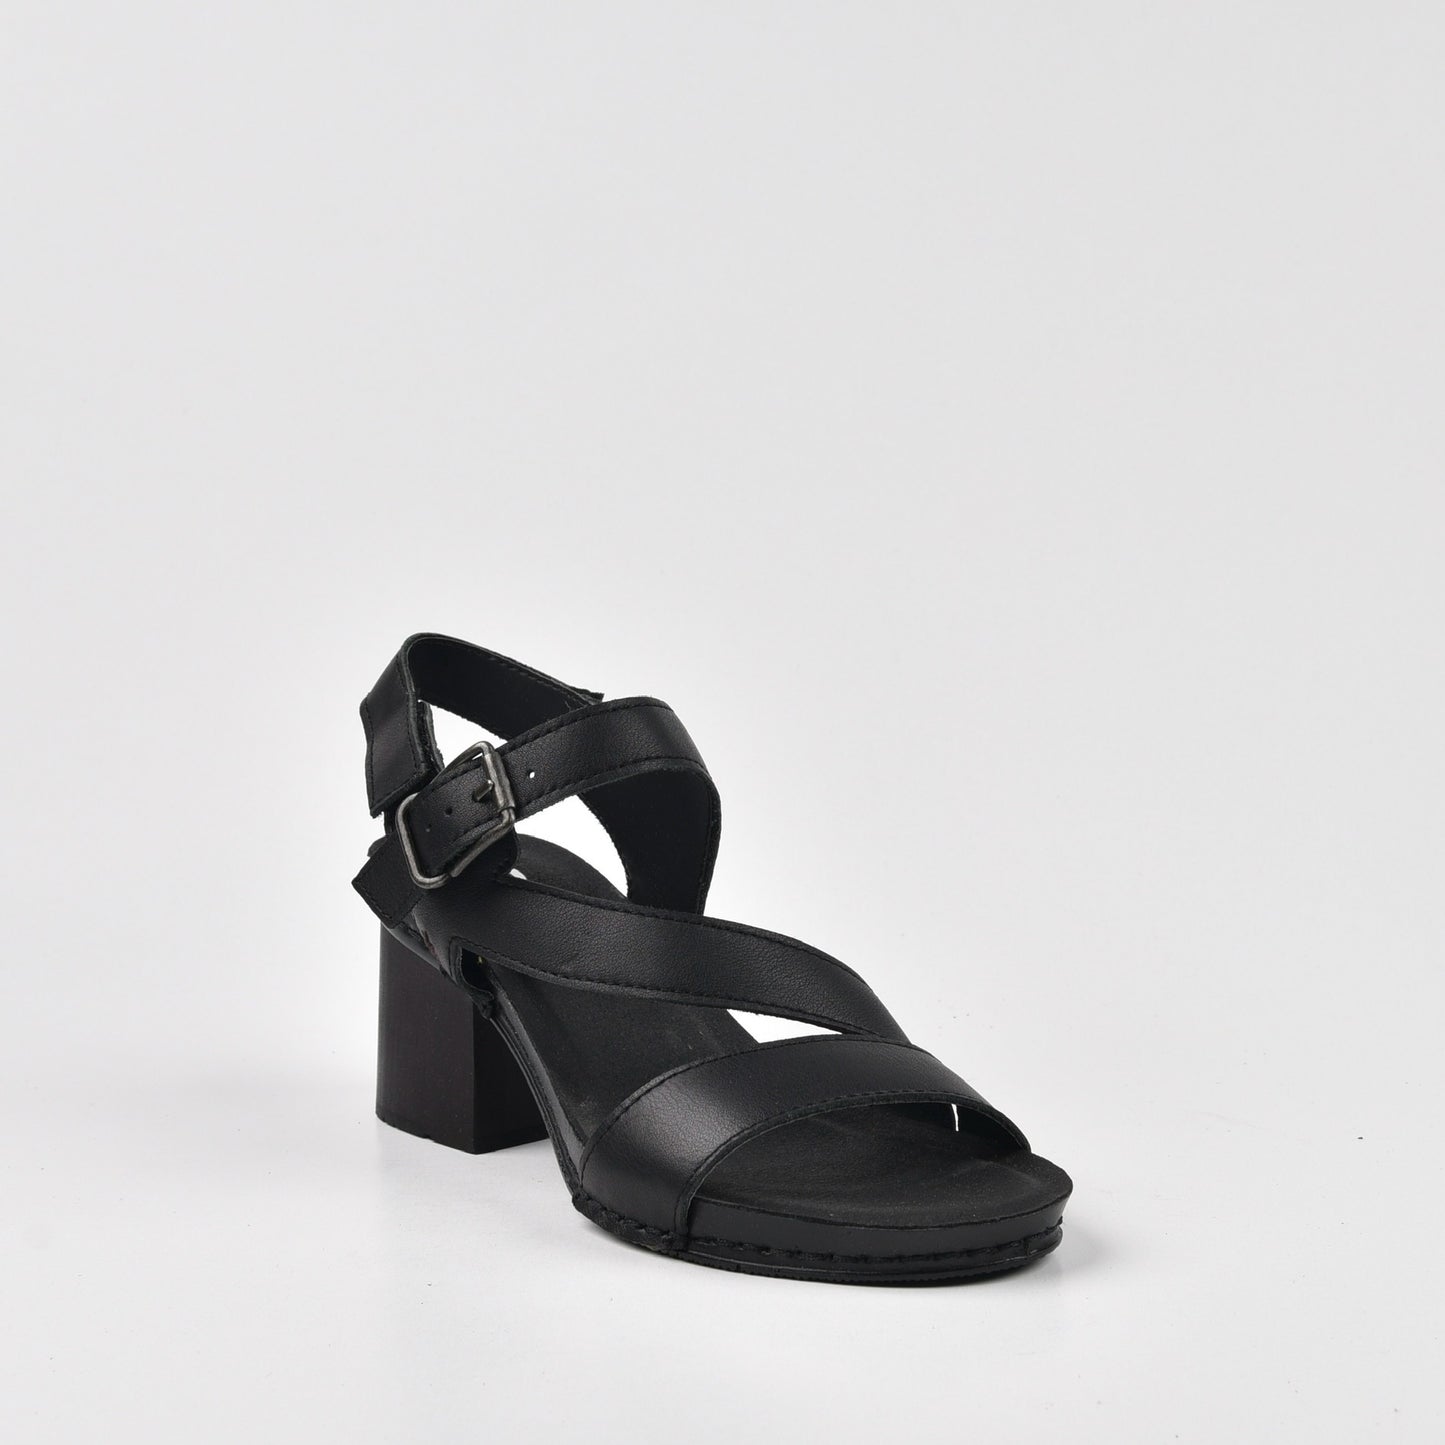 Art Spanish Strap Medium Heel Sandal for Women in Nappa Black.